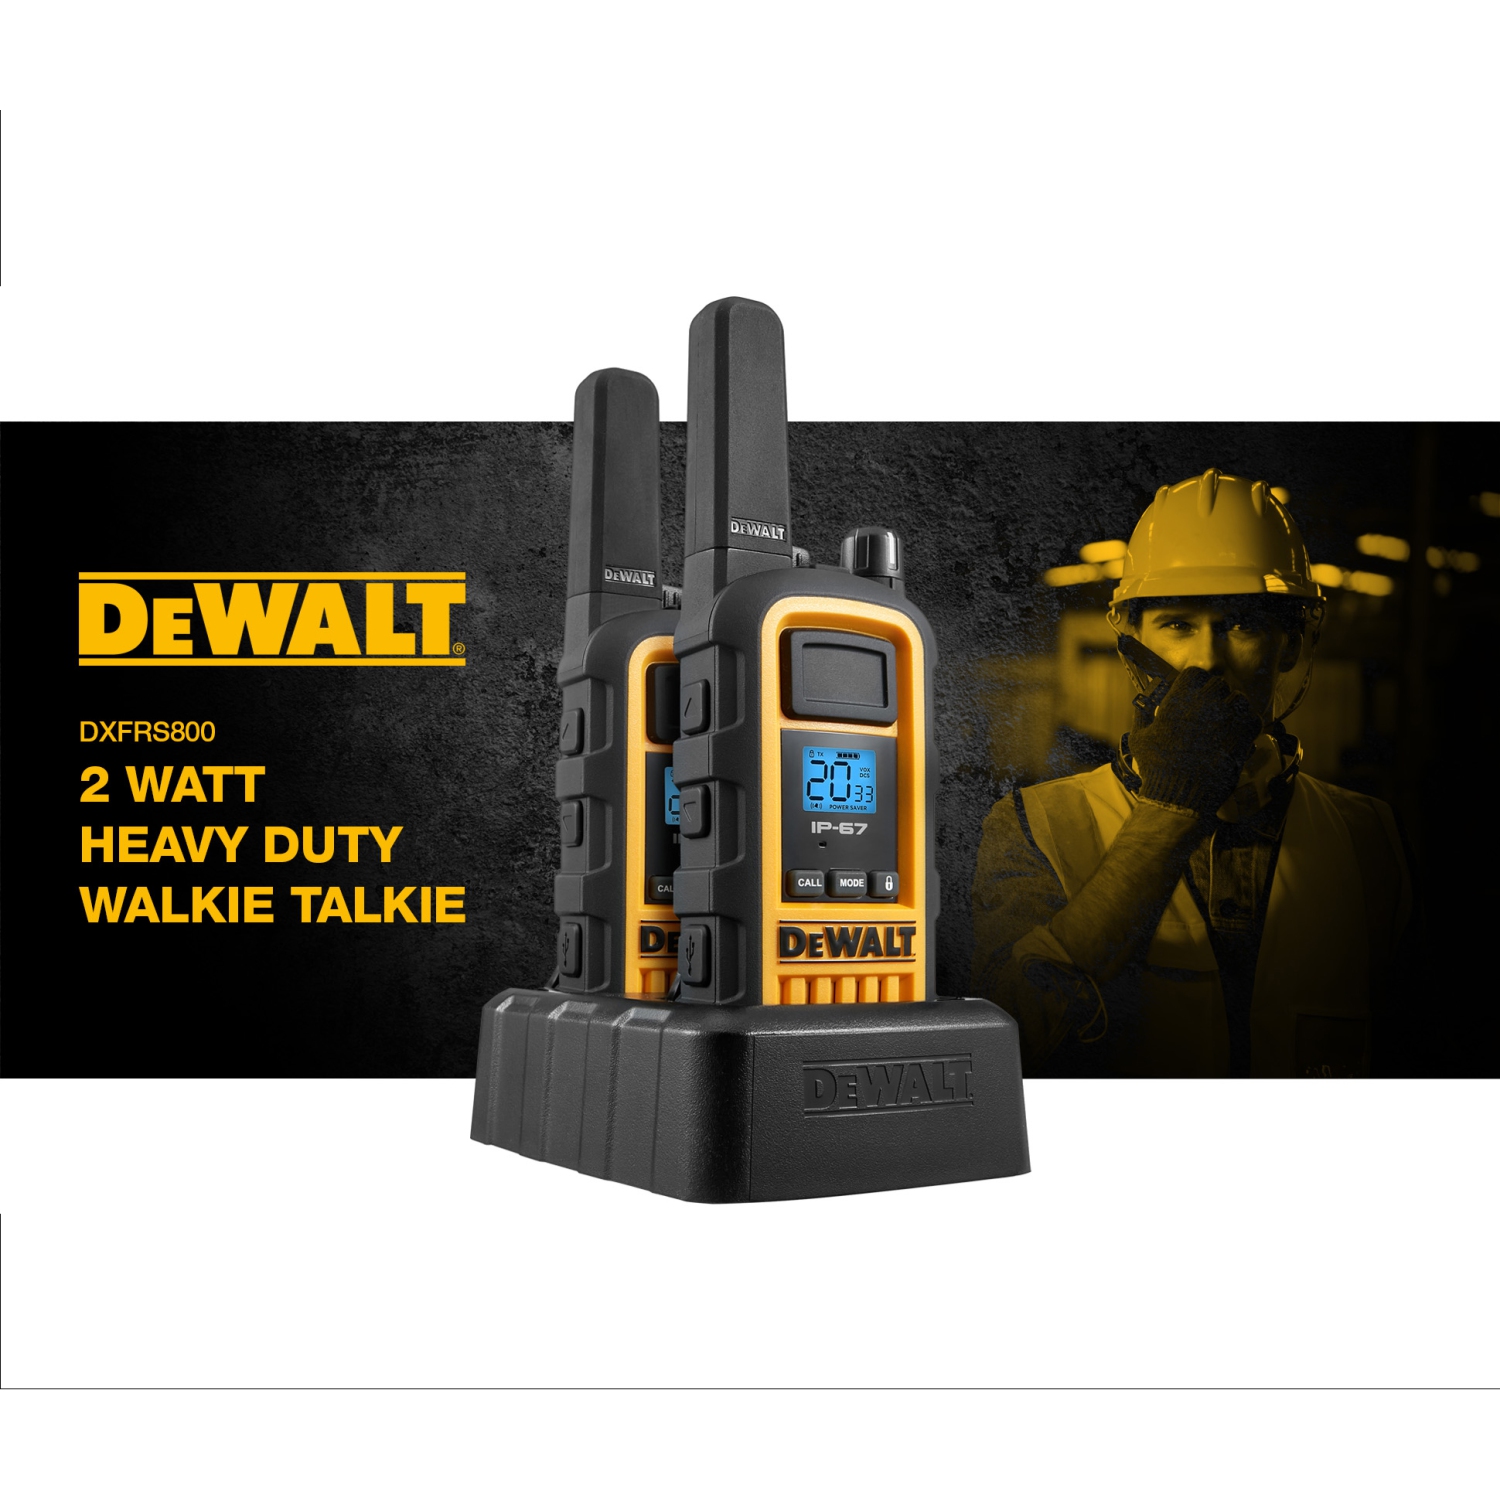 DEWALT DXFRS300 Bundle 1W Walkie Talkies Heavy Duty Business Two-Way Radios, Pack with Headsets (1DXFRS300-SV1) - 5